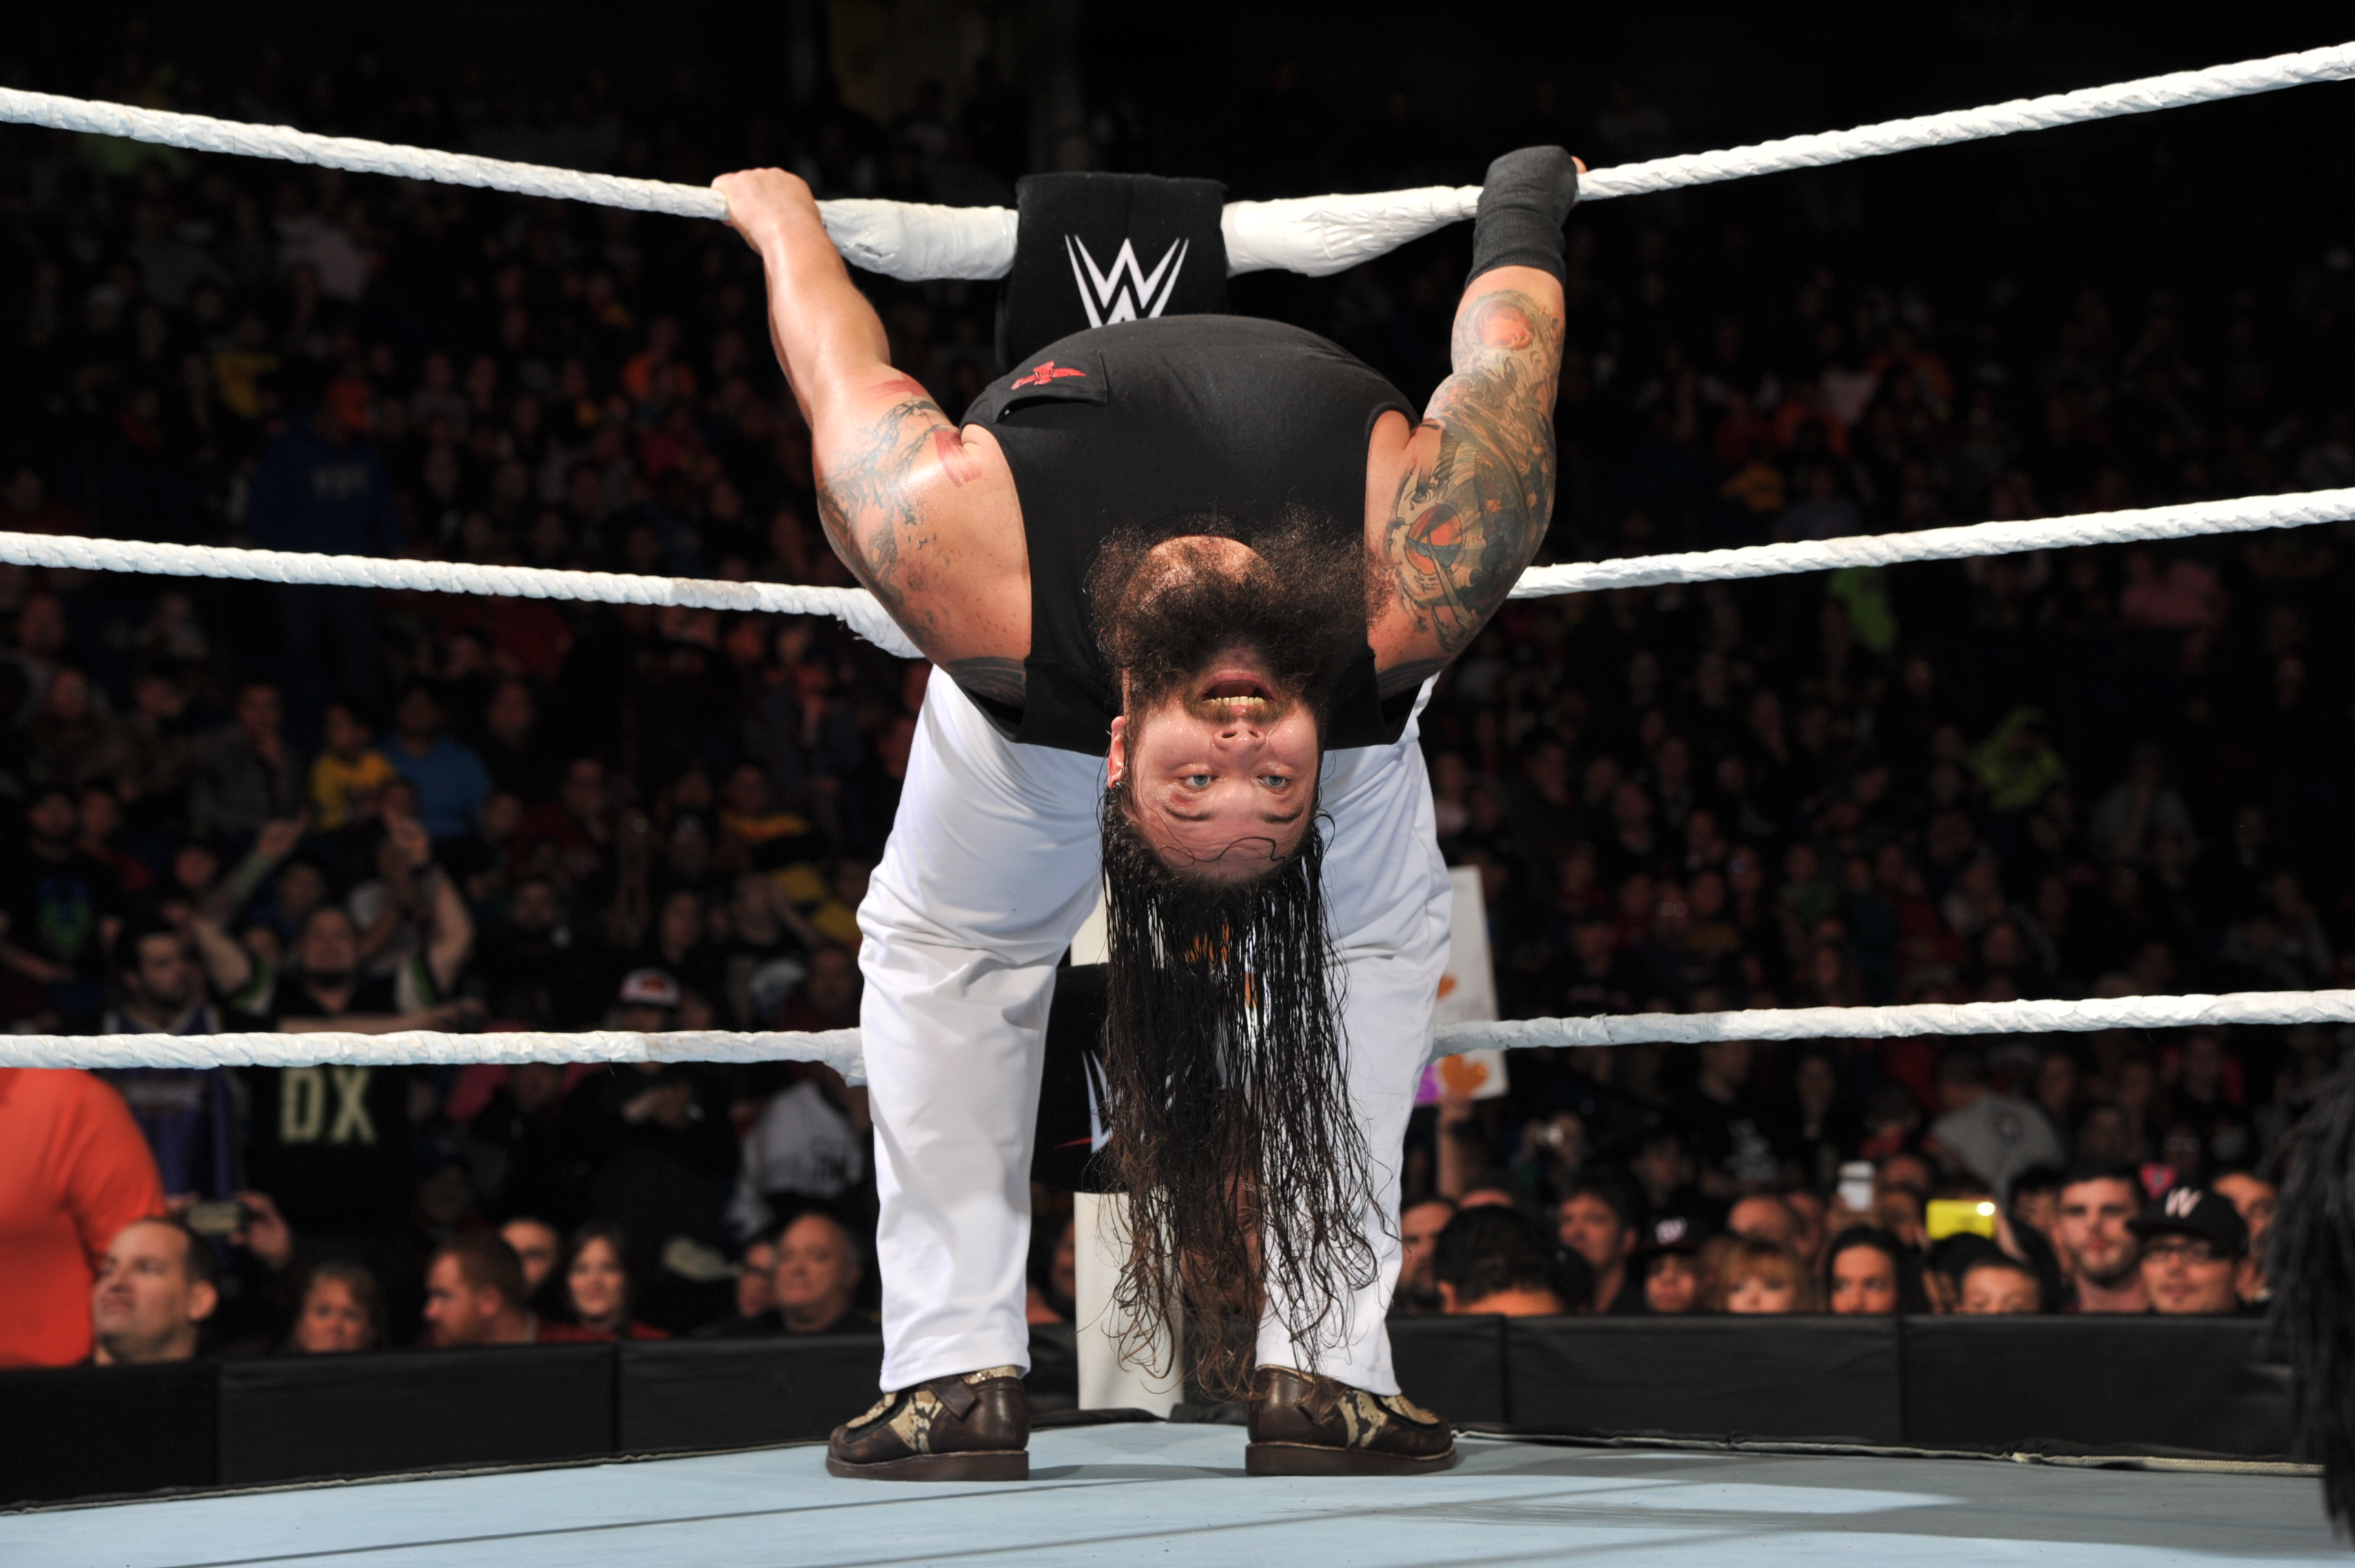 Bray Wyatt faces The Undertaker at WrestleMania (Photo: WWE)